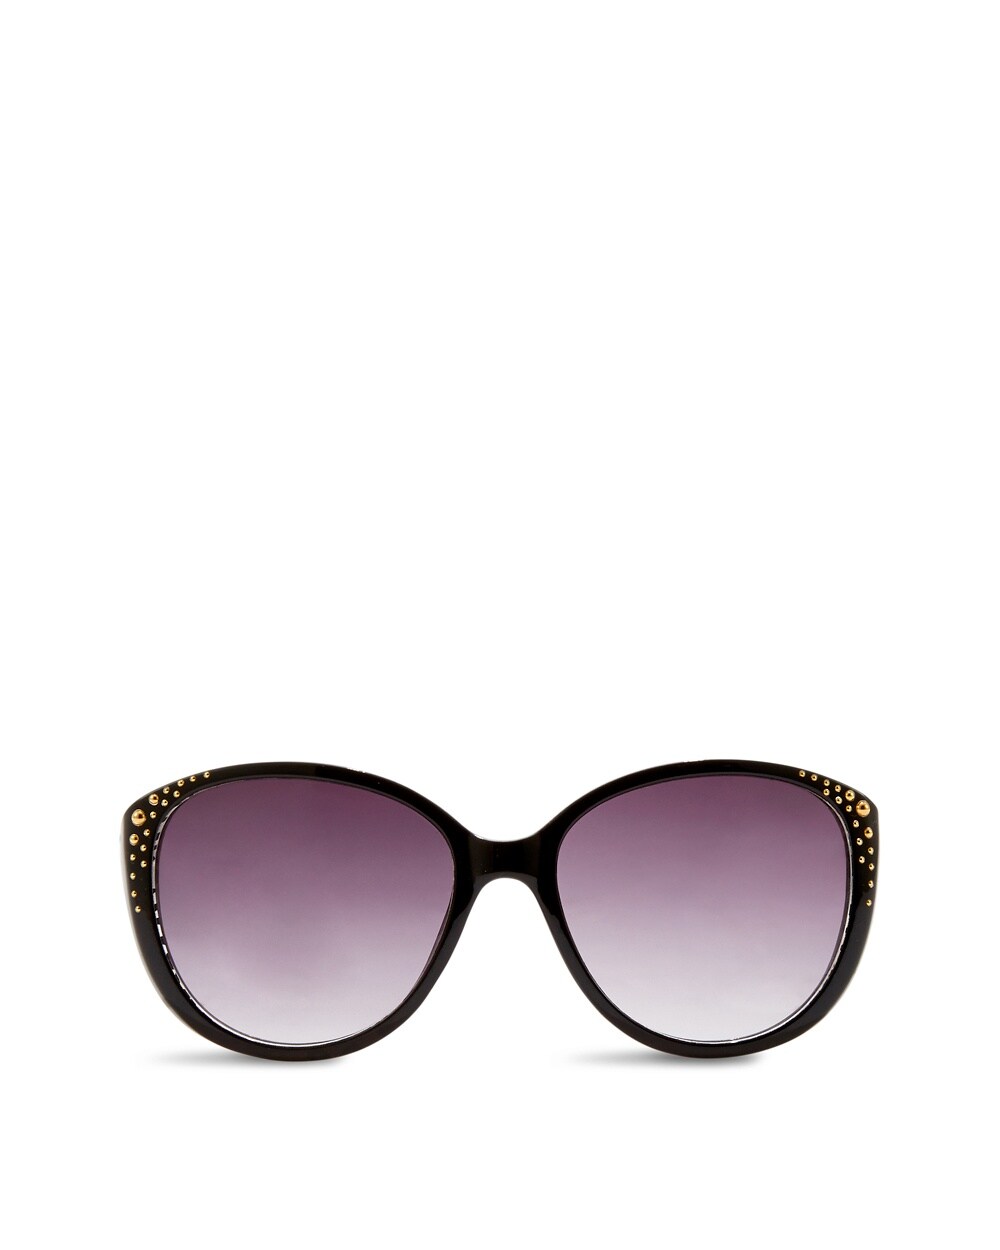 Maura Black Sunglasses